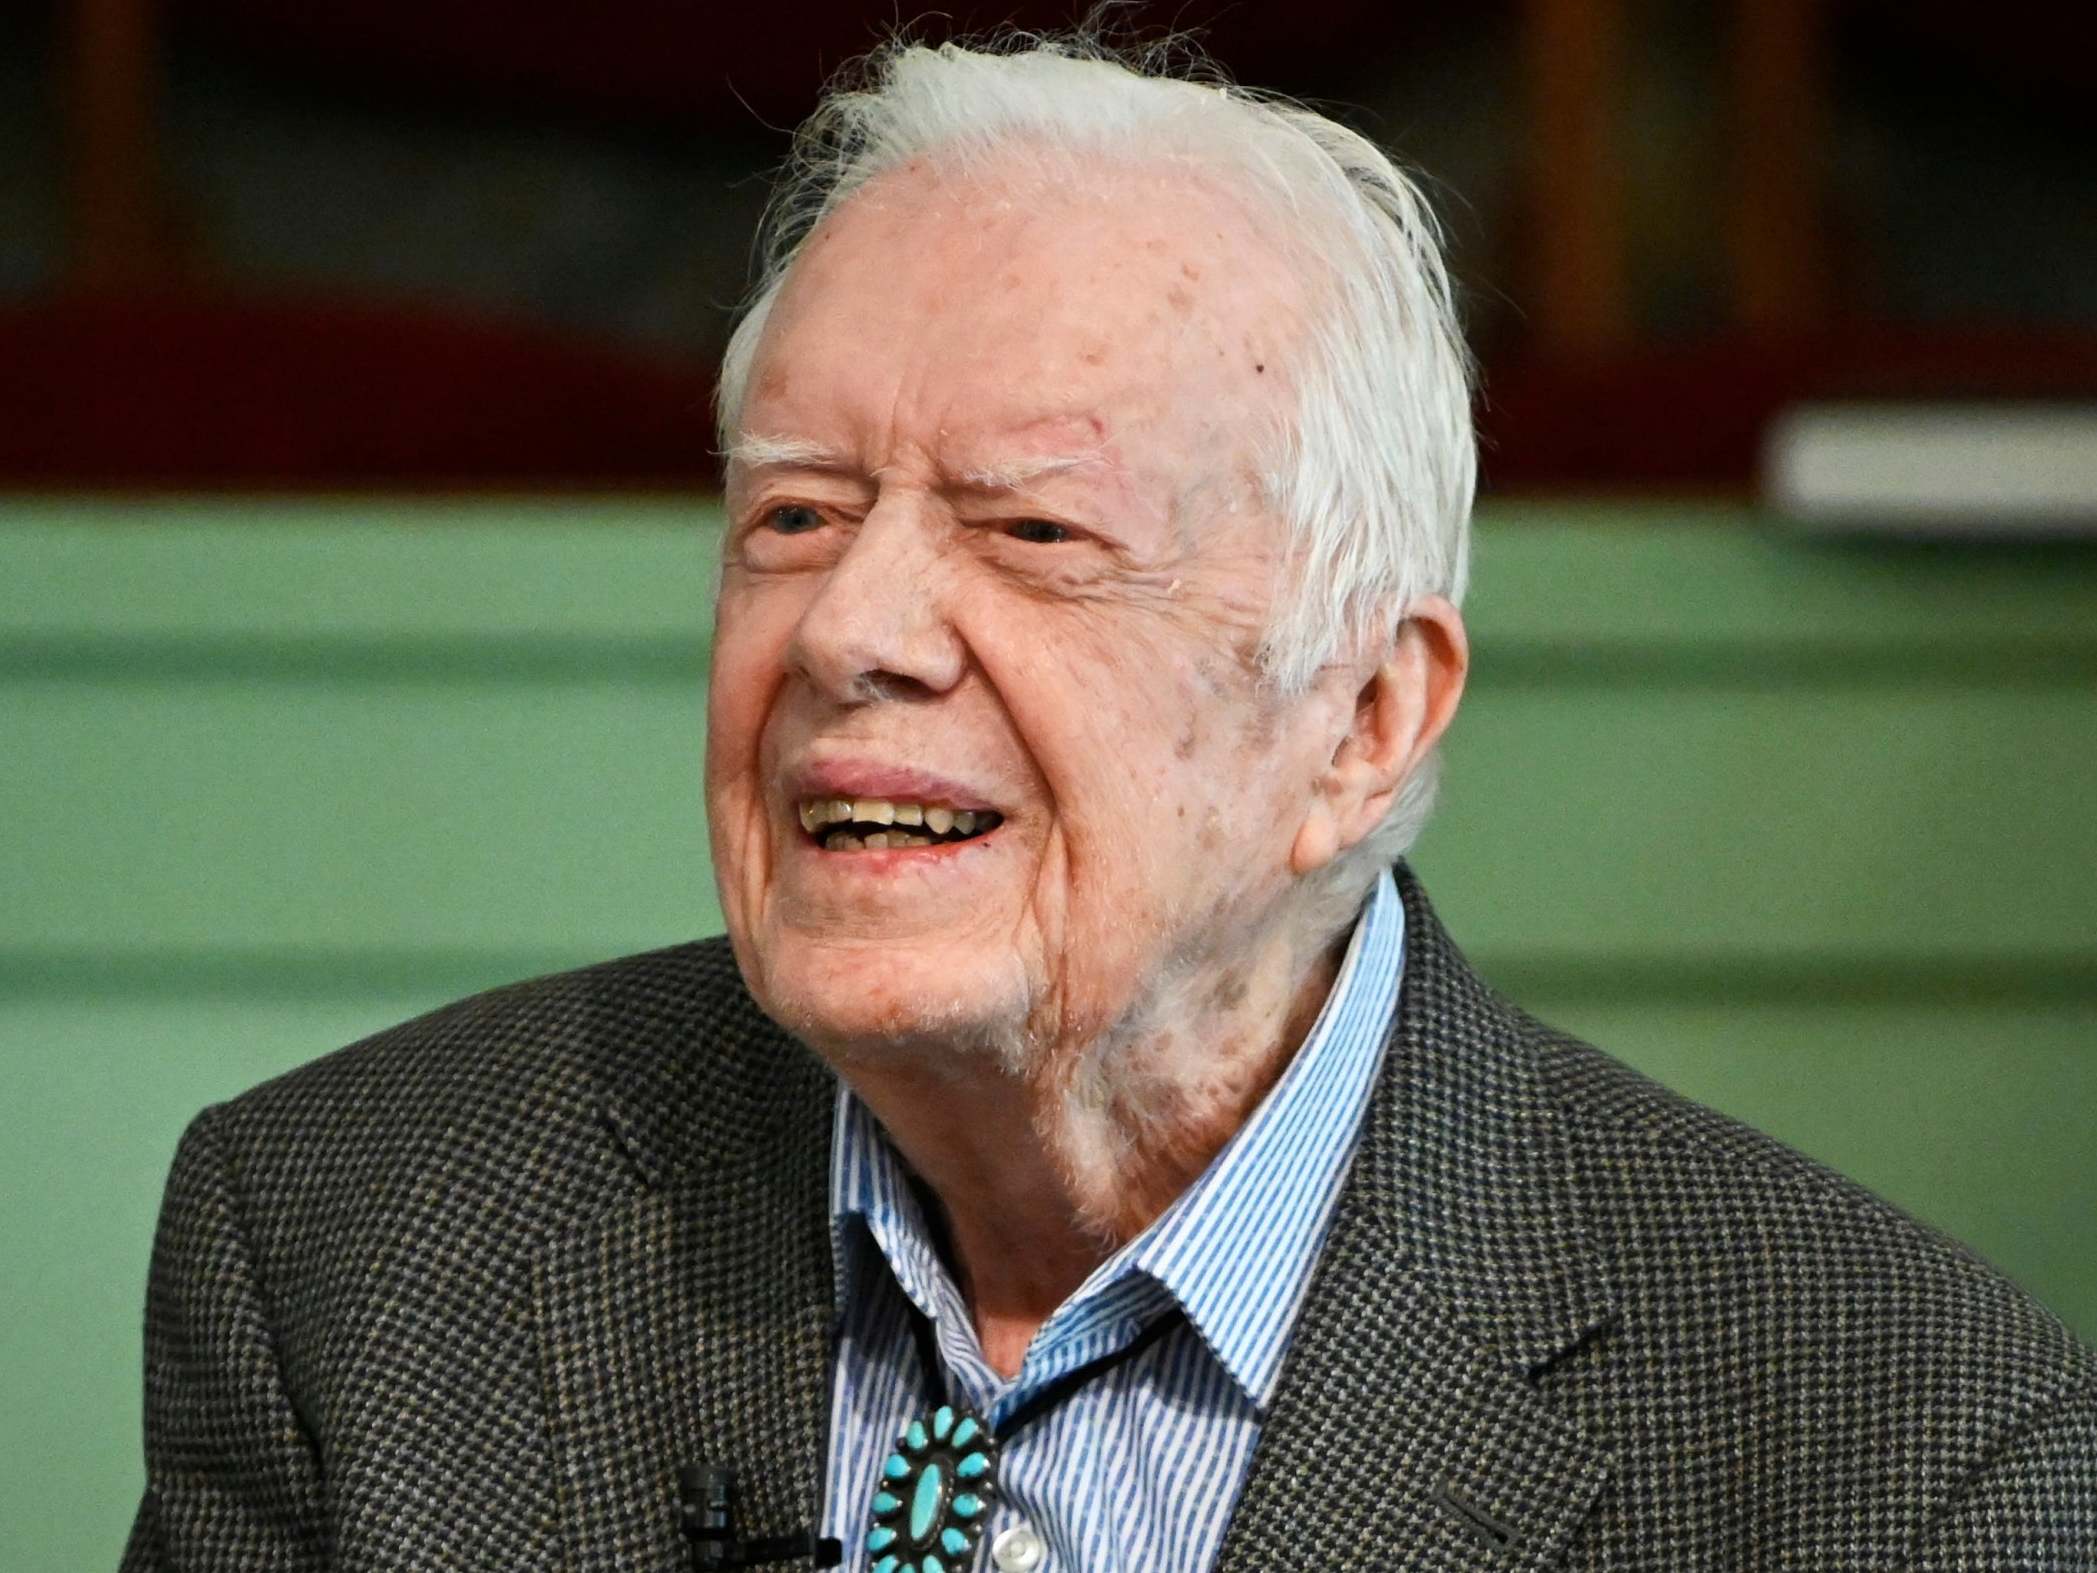 Jimmy Carter teaches Sunday school at Maranatha Baptist Church in Plains, Georgia, on 3 November